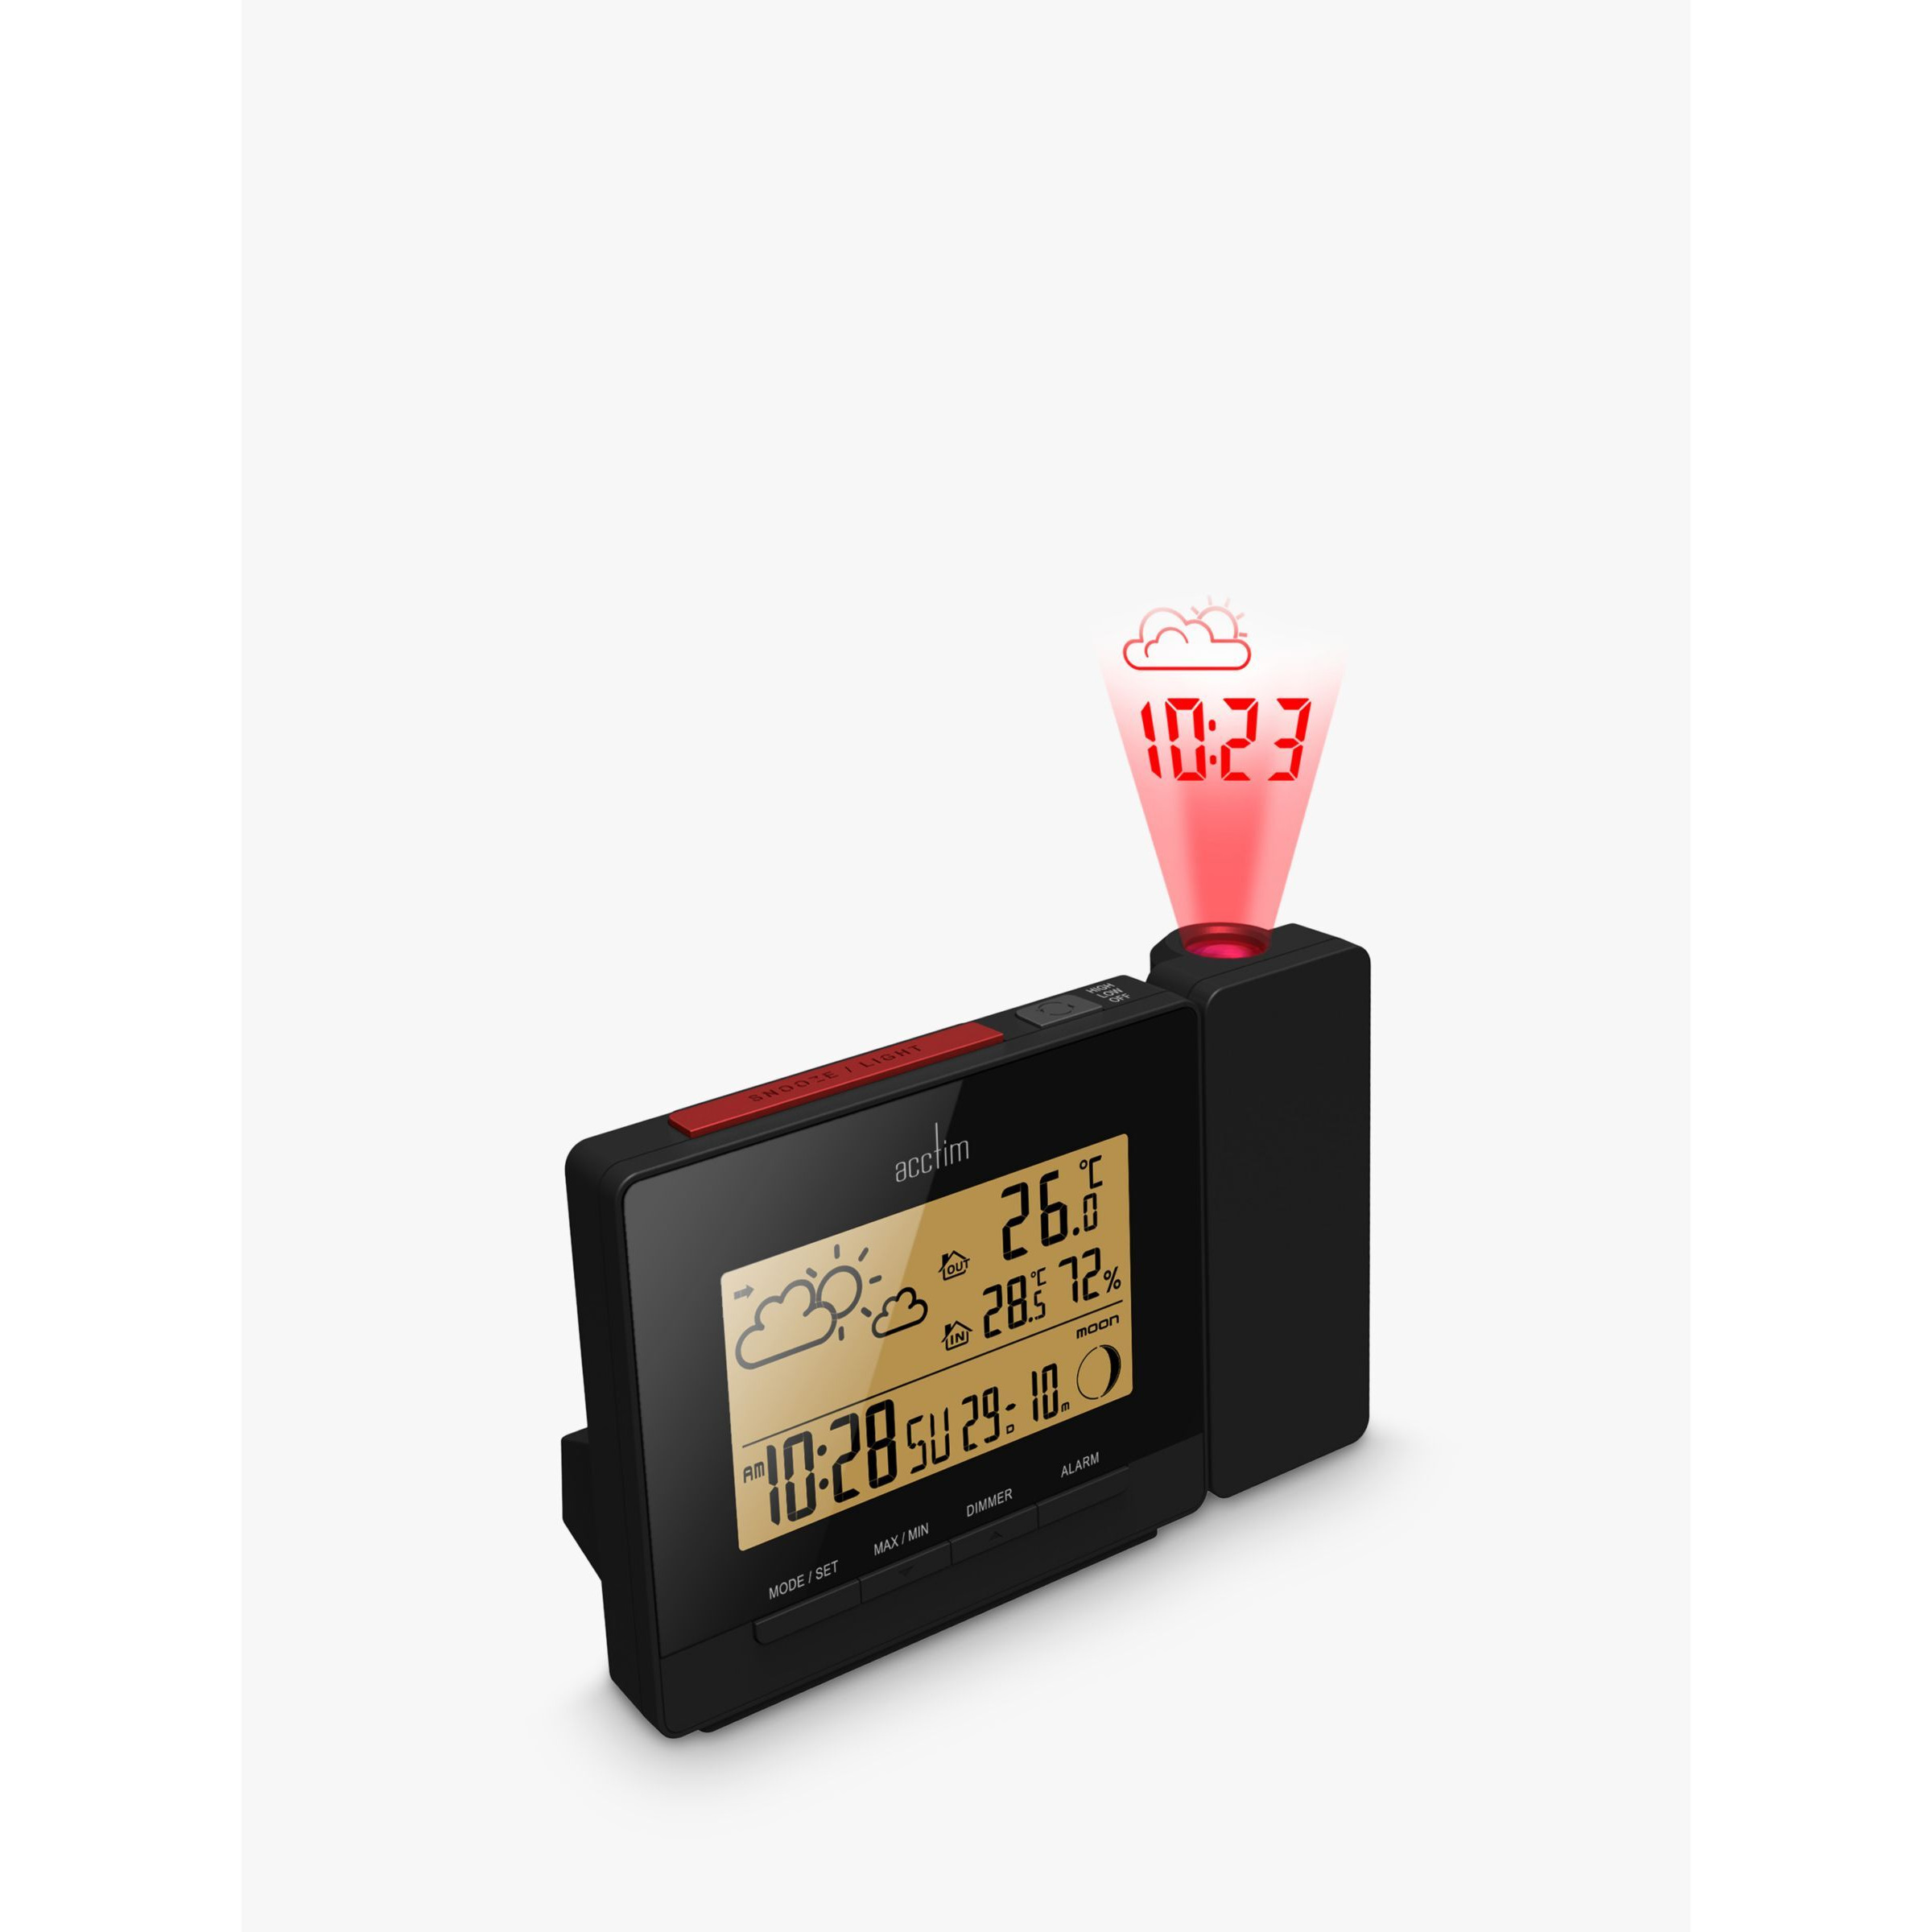 Acctim Neige Weather Station Digital Alarm Clock, Black - image 1